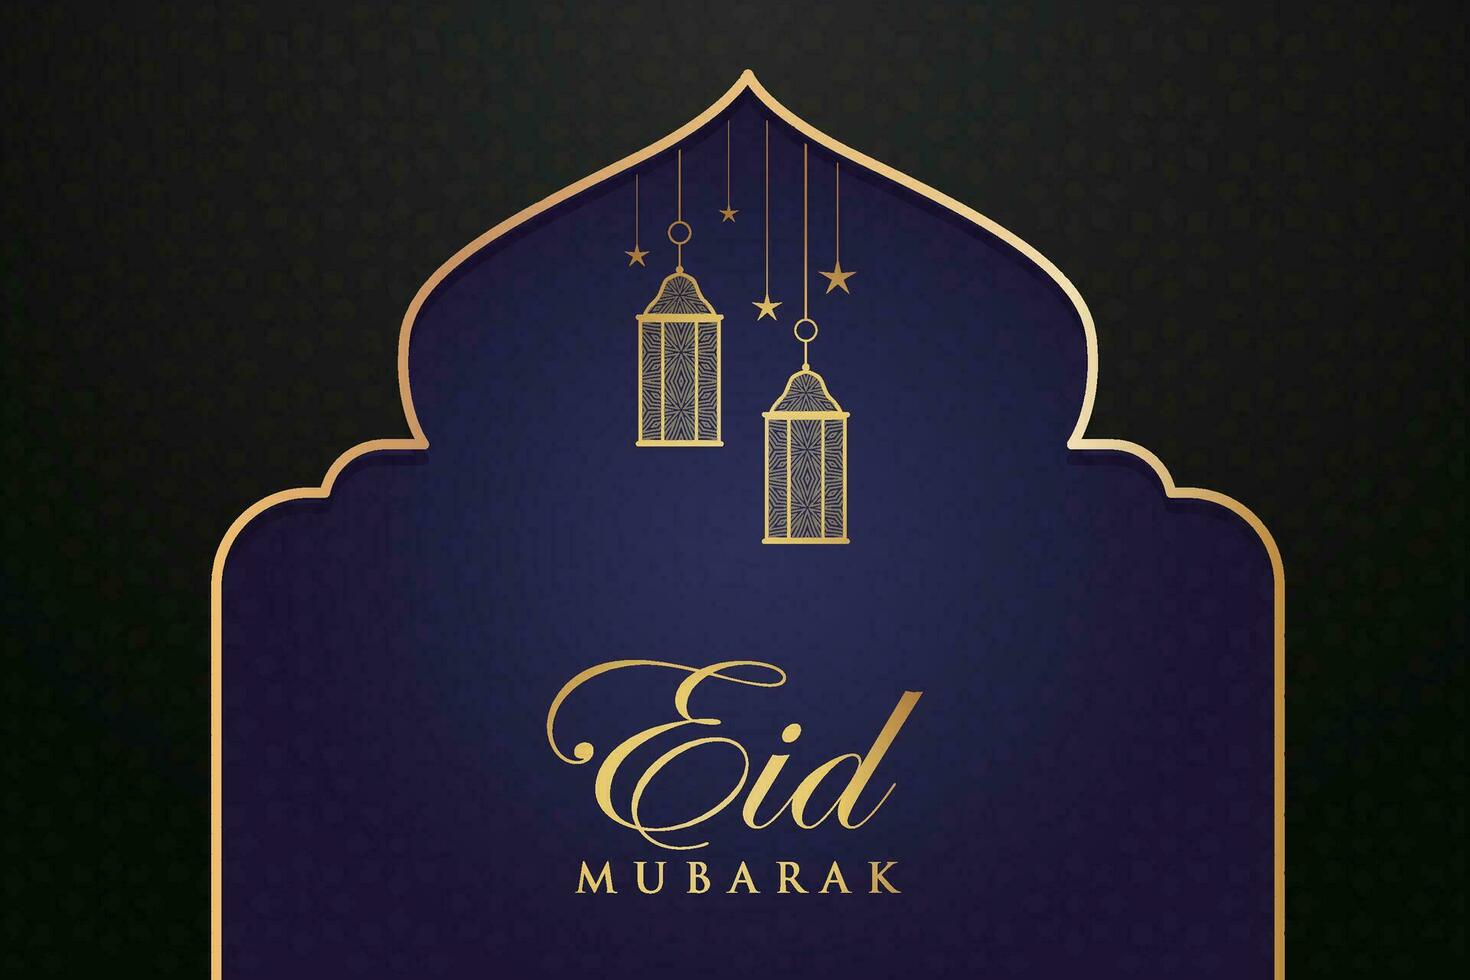 Ramadán eid Mubarak saludo tarjeta con mezquita silueta gratis vector ilustración